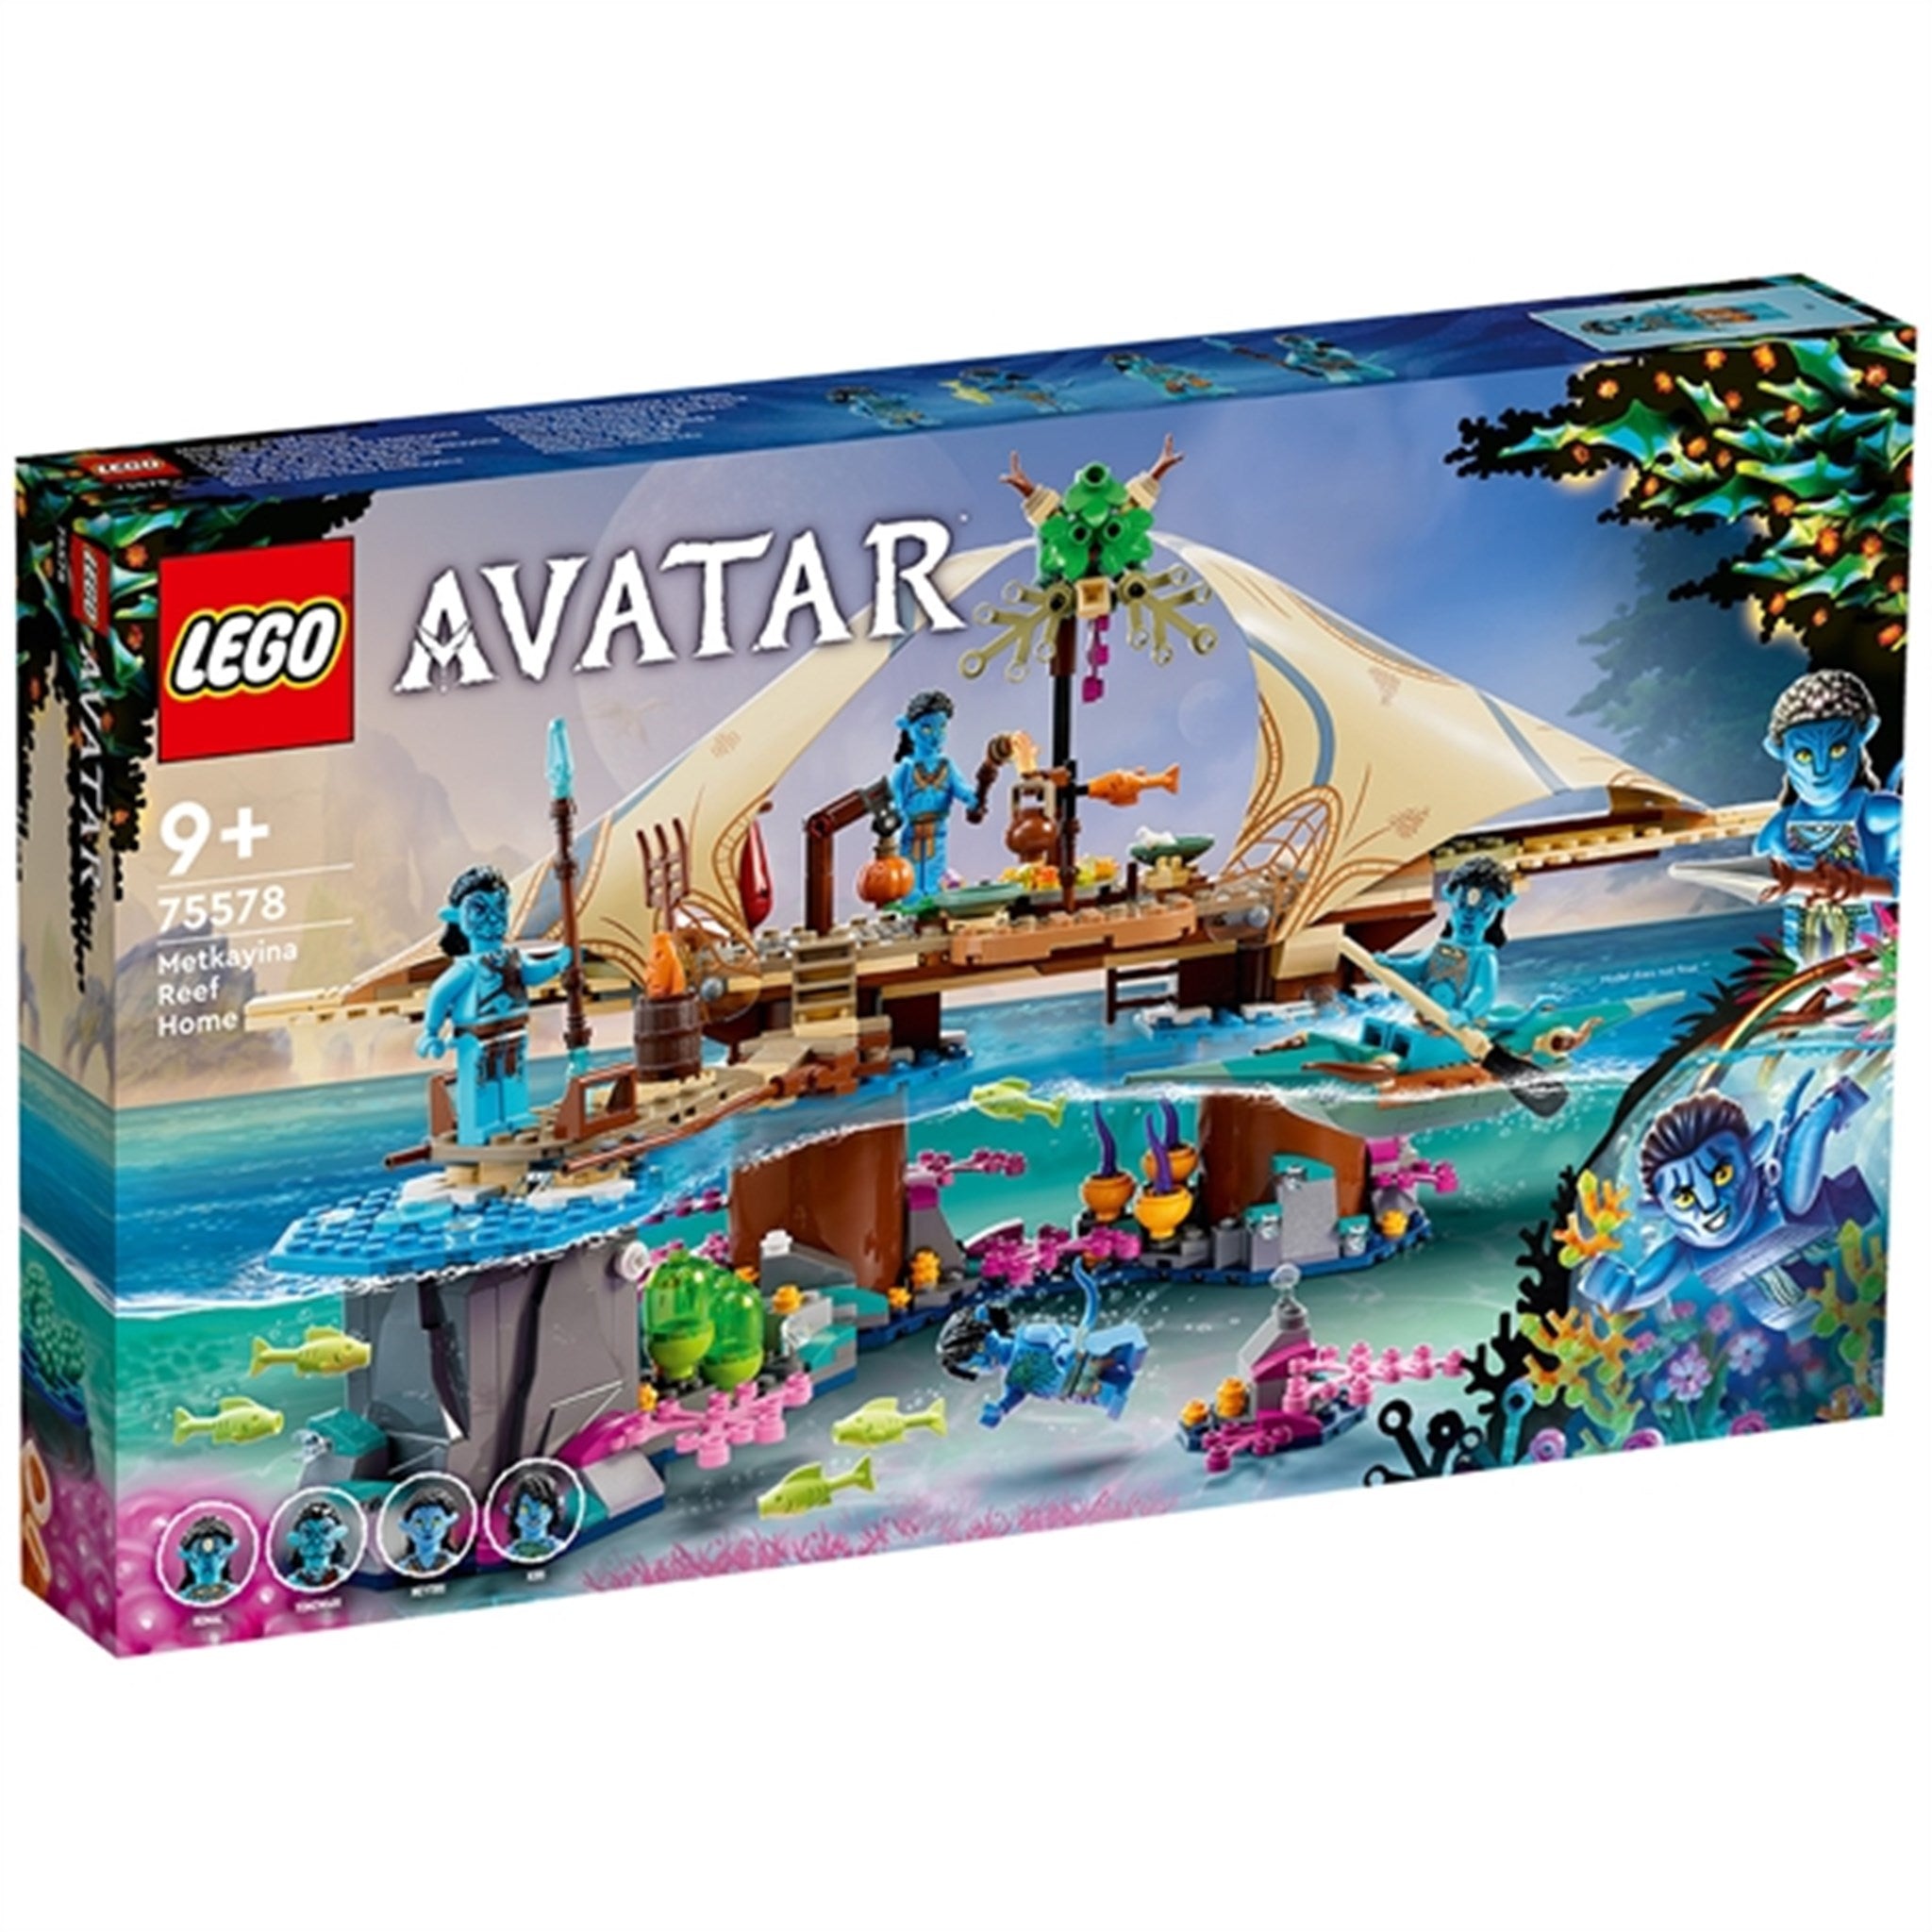 LEGO® Avatar Metkayina Reef Home